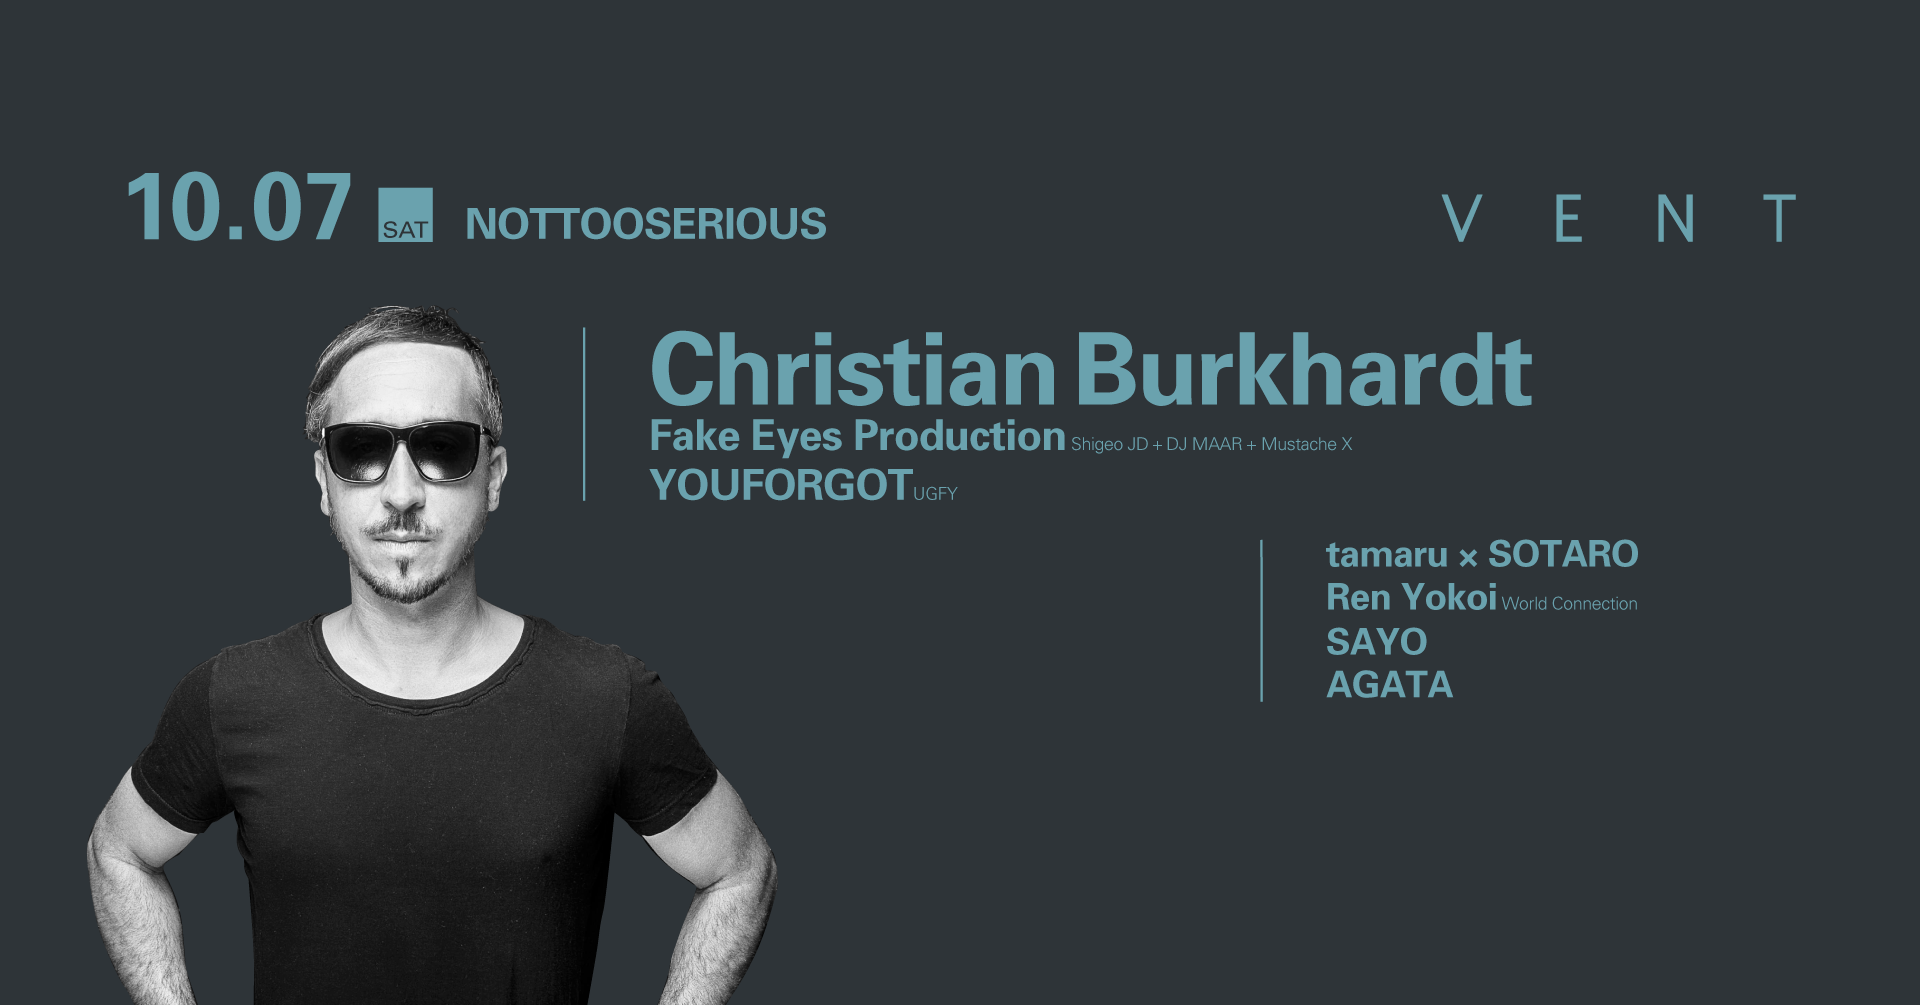 Christian Burkhardt at NOTTOOSERIOUS